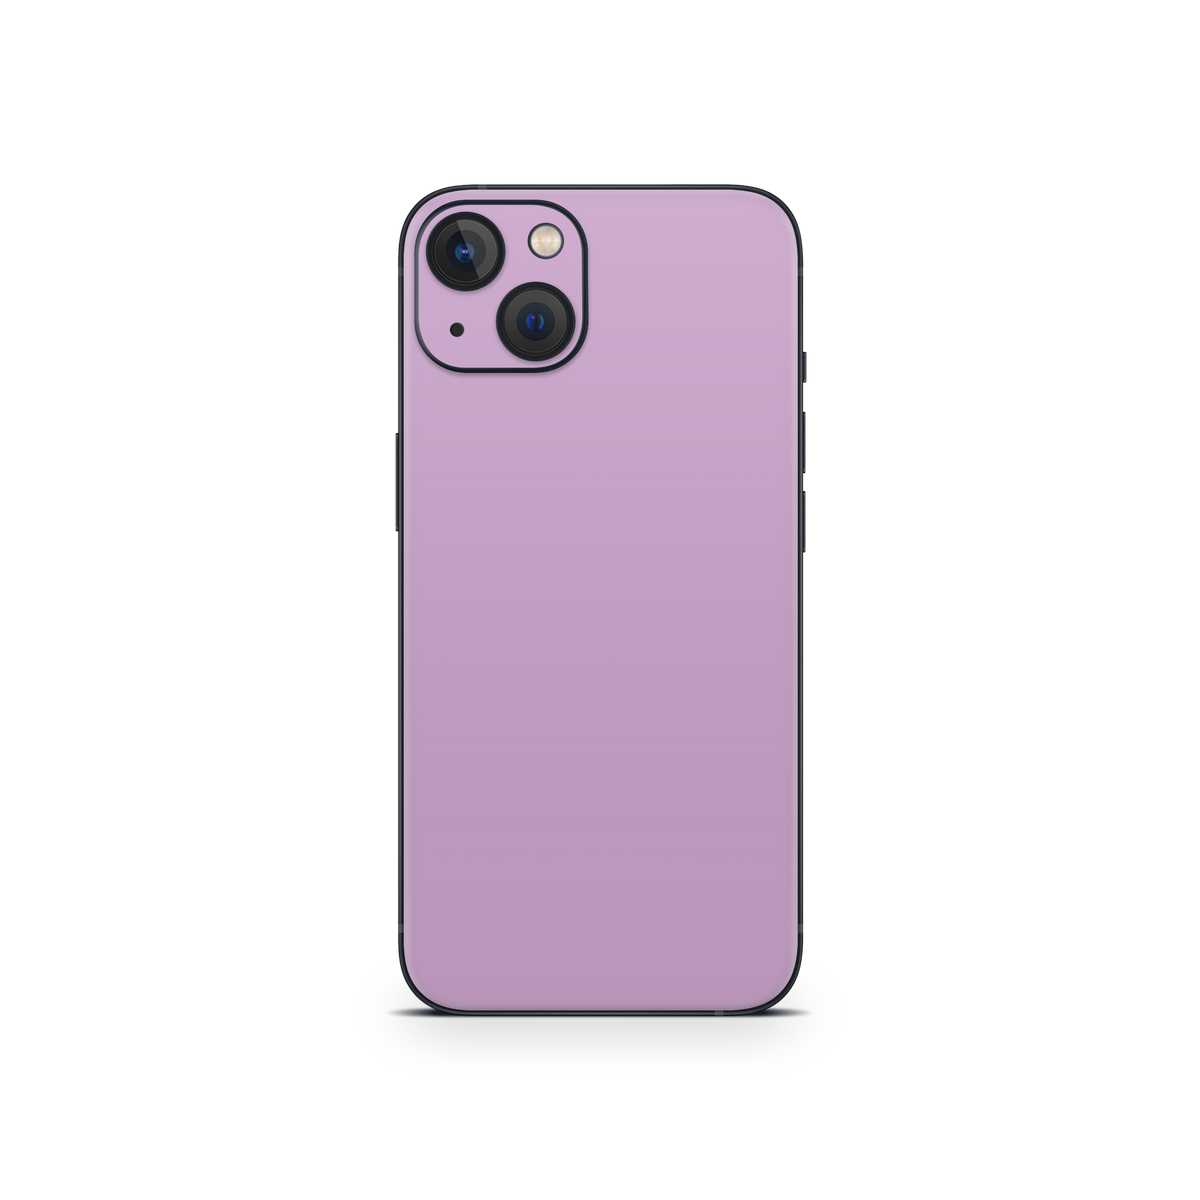 Apple iPhone 13 Soft Lilac Skin